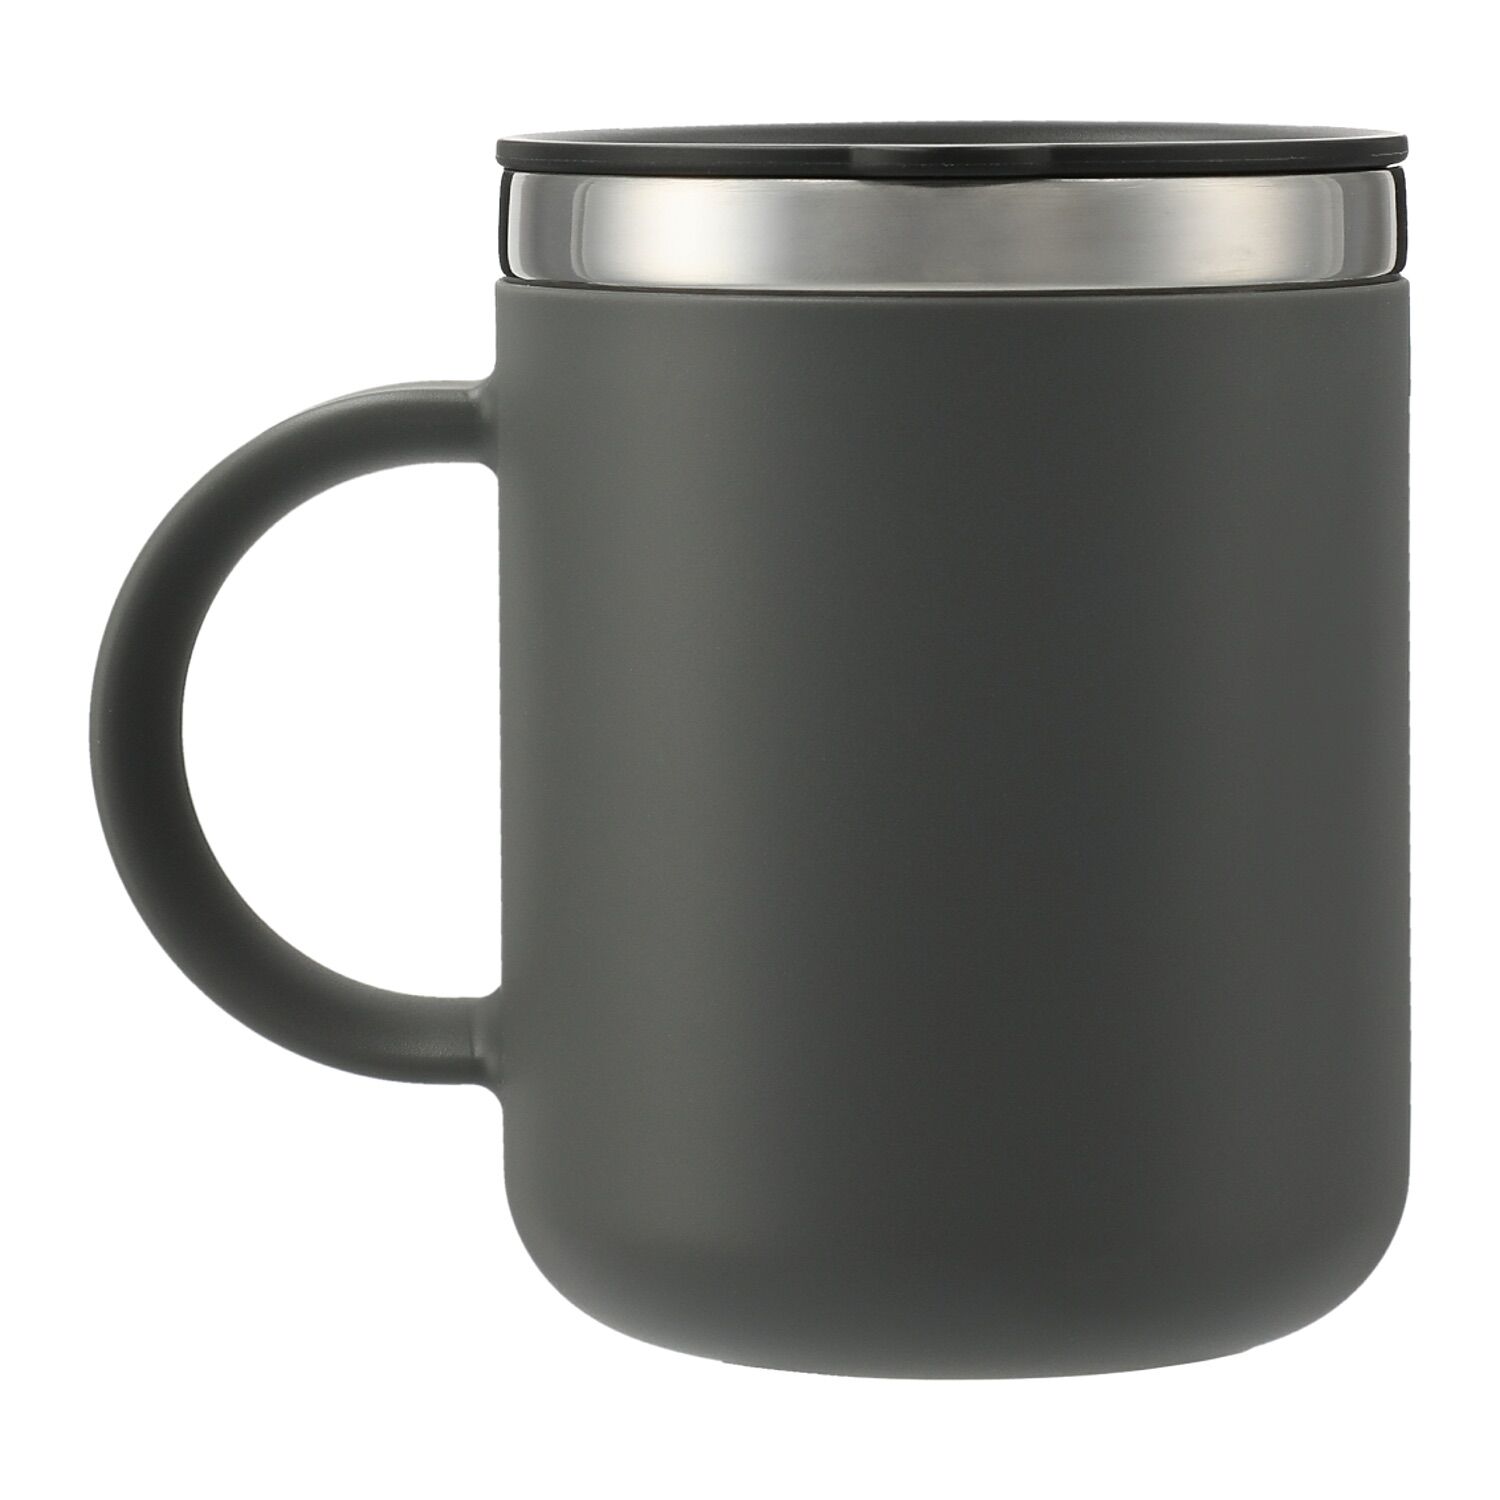 Hydro Flask 24 oz Mug - Black